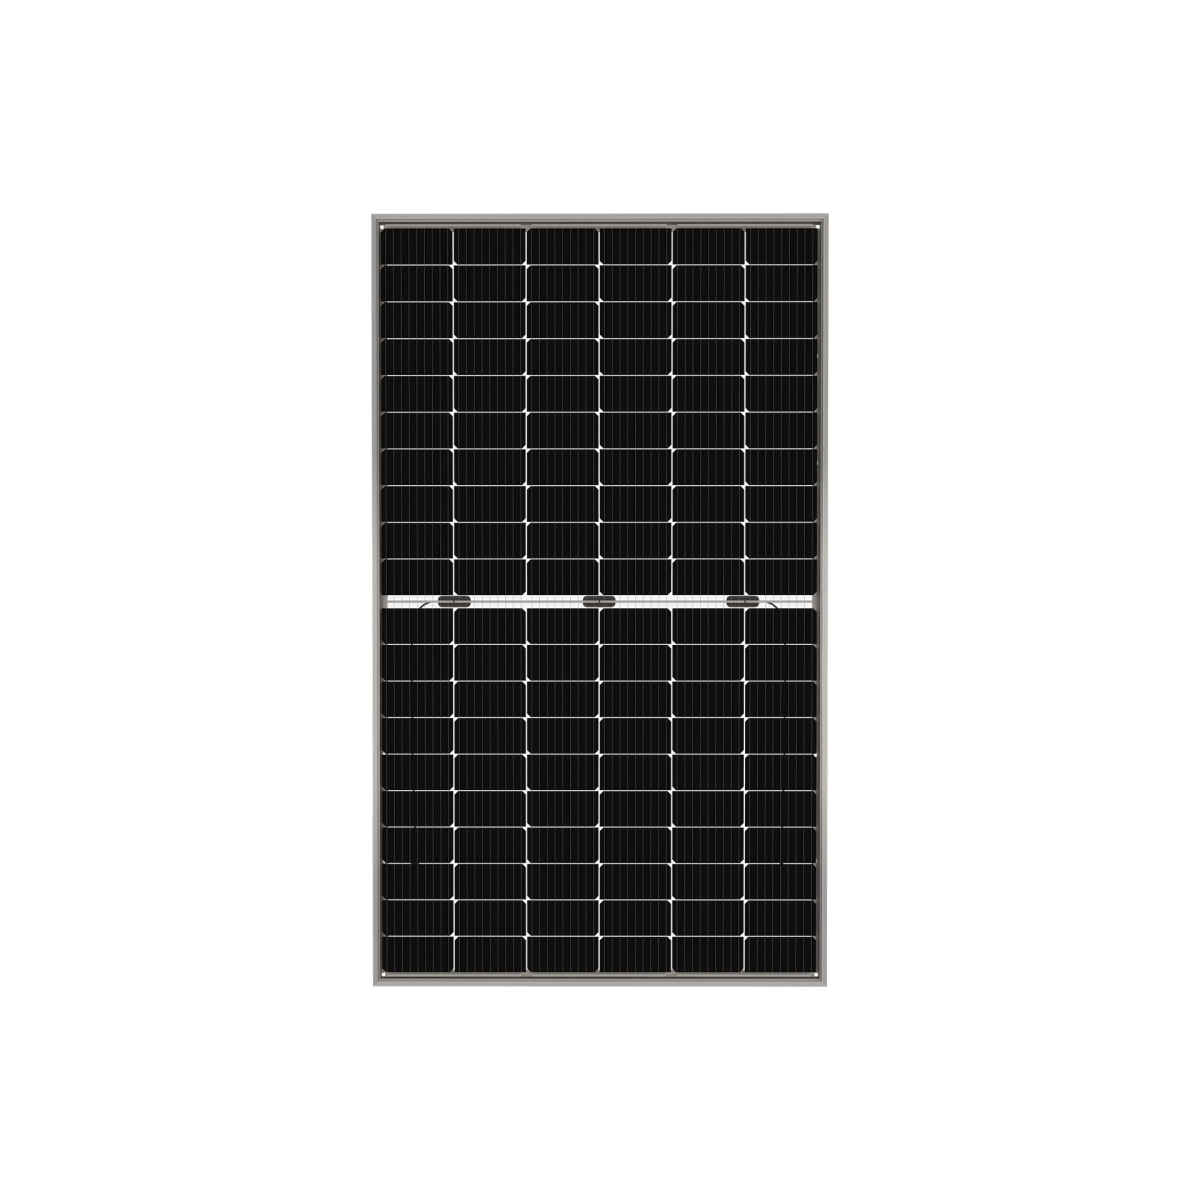 TommaTech 375 Watt 120 Percmono Bifacial Half-Cut Multi Busbar Solar Panel